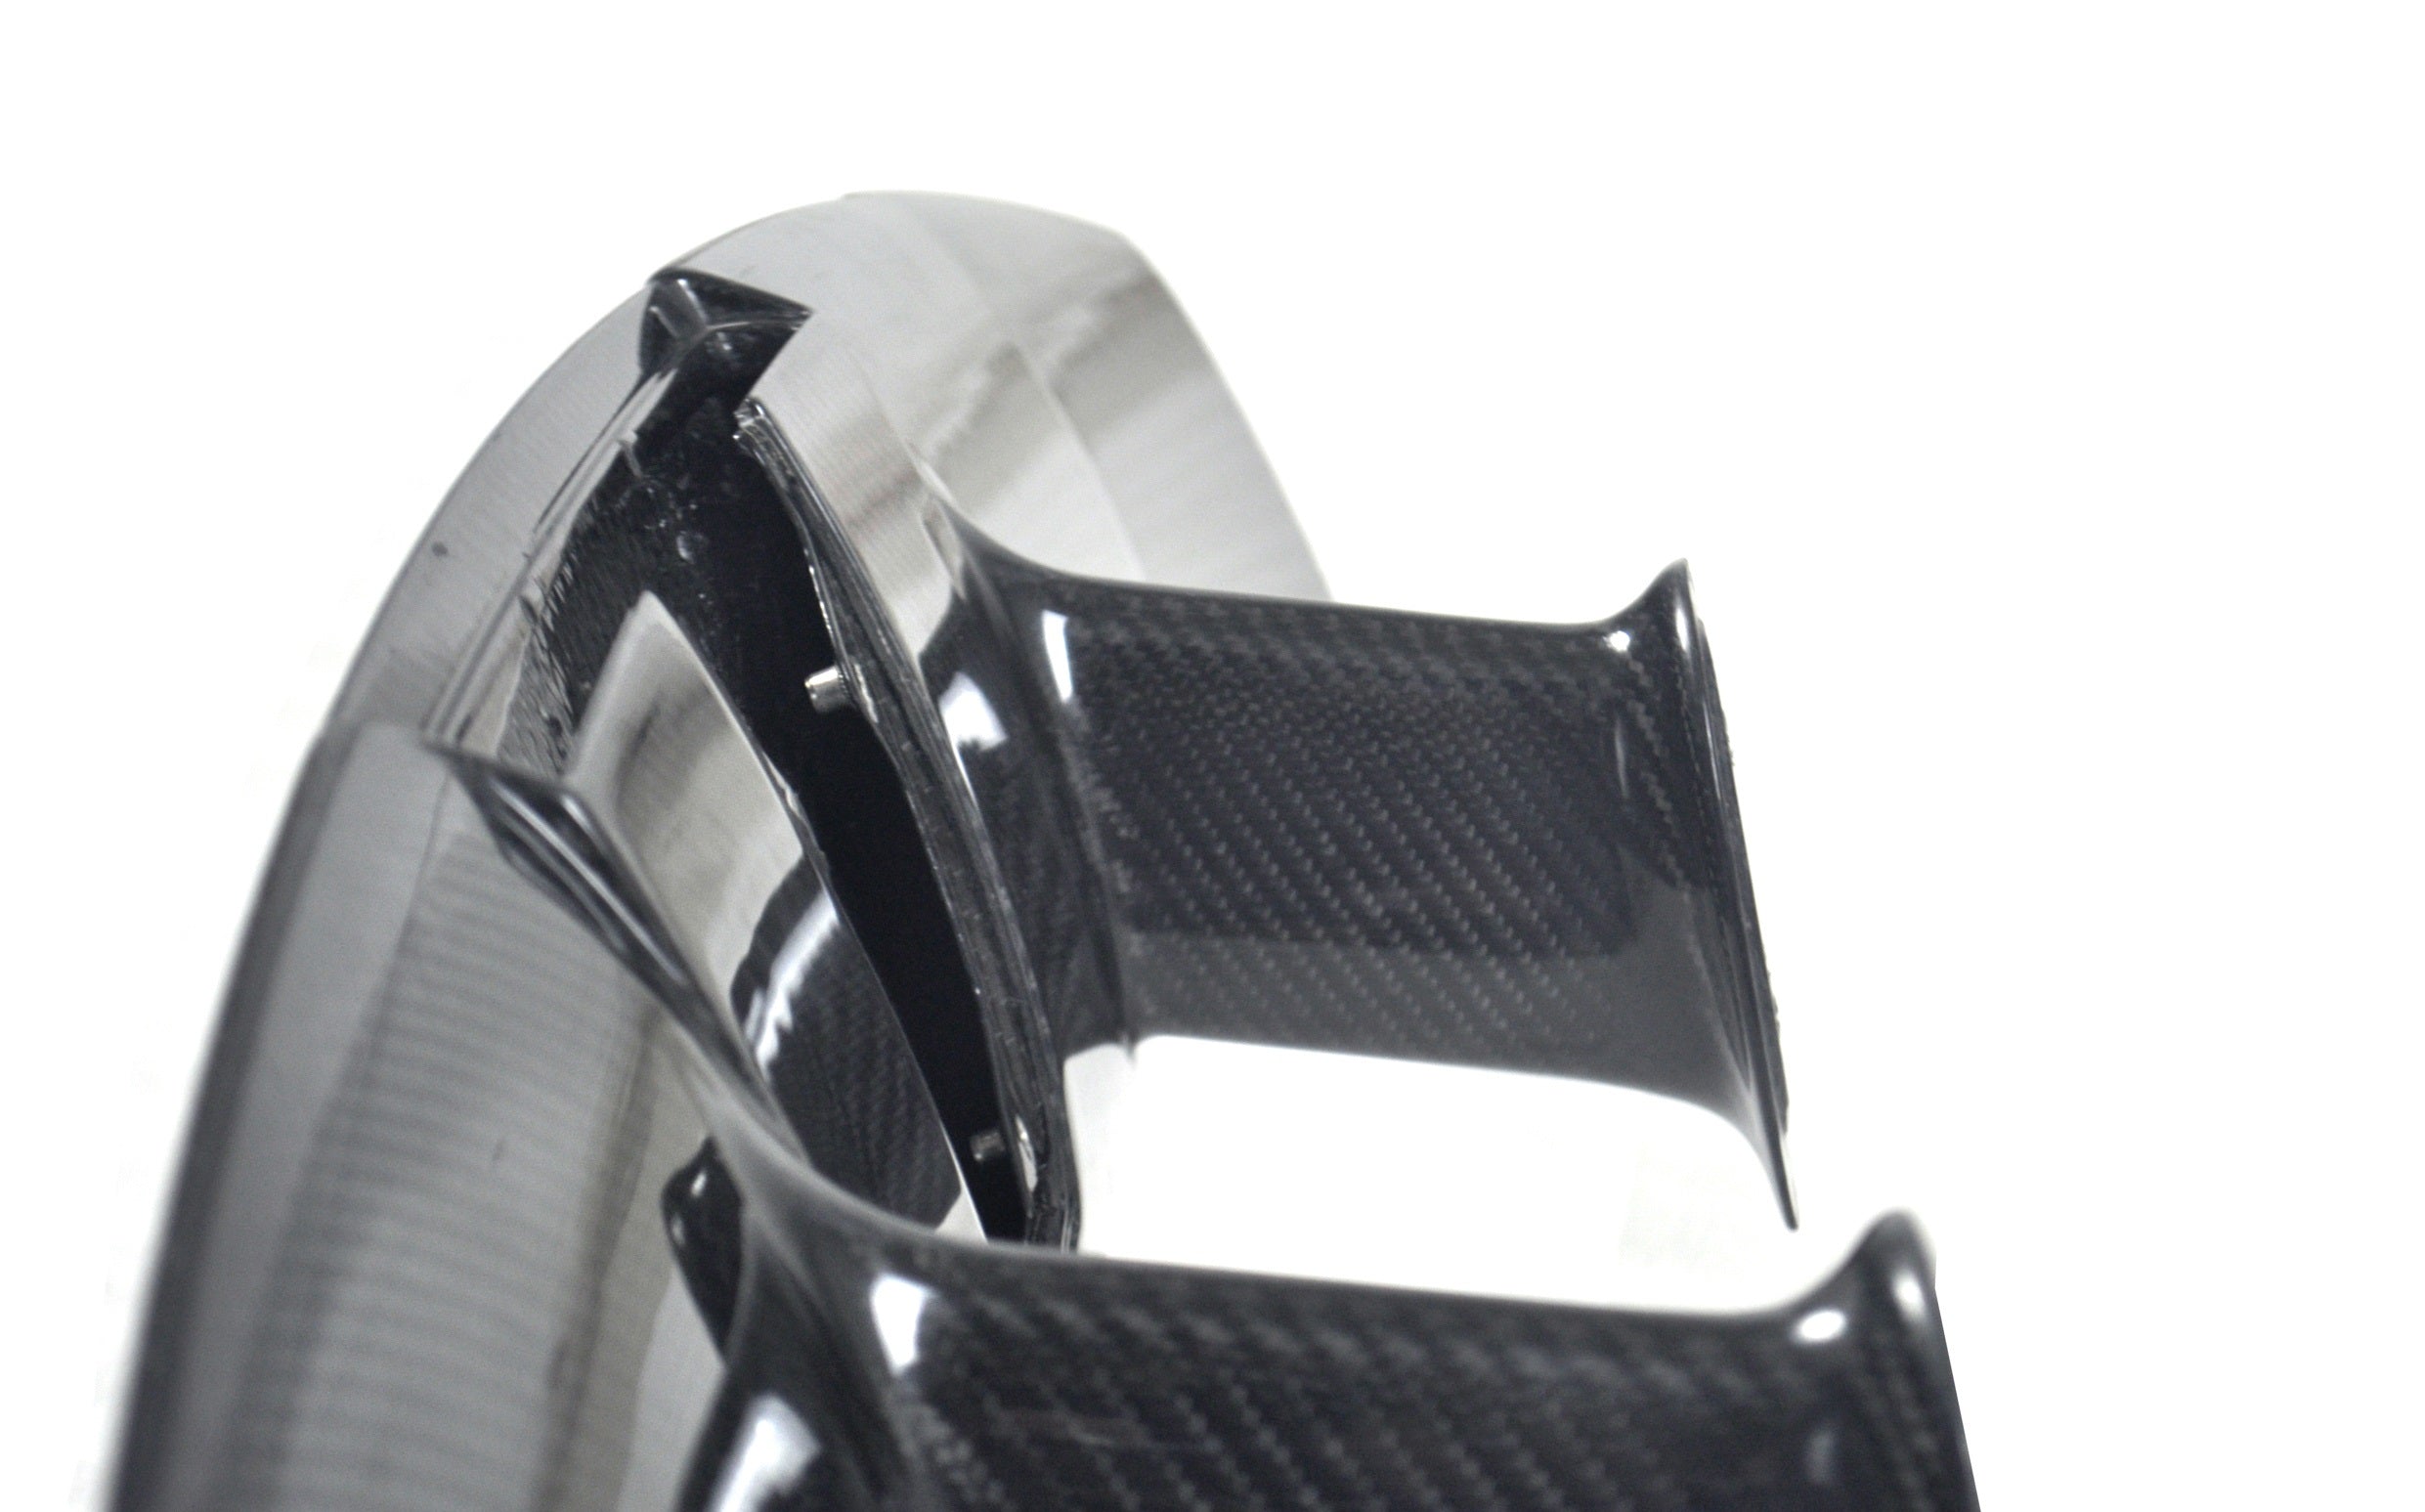 CMST Tuning Carbon Fiber Superleggera Style Rear Spoiler Wing for Lamborghini Gallardo 2009-2014